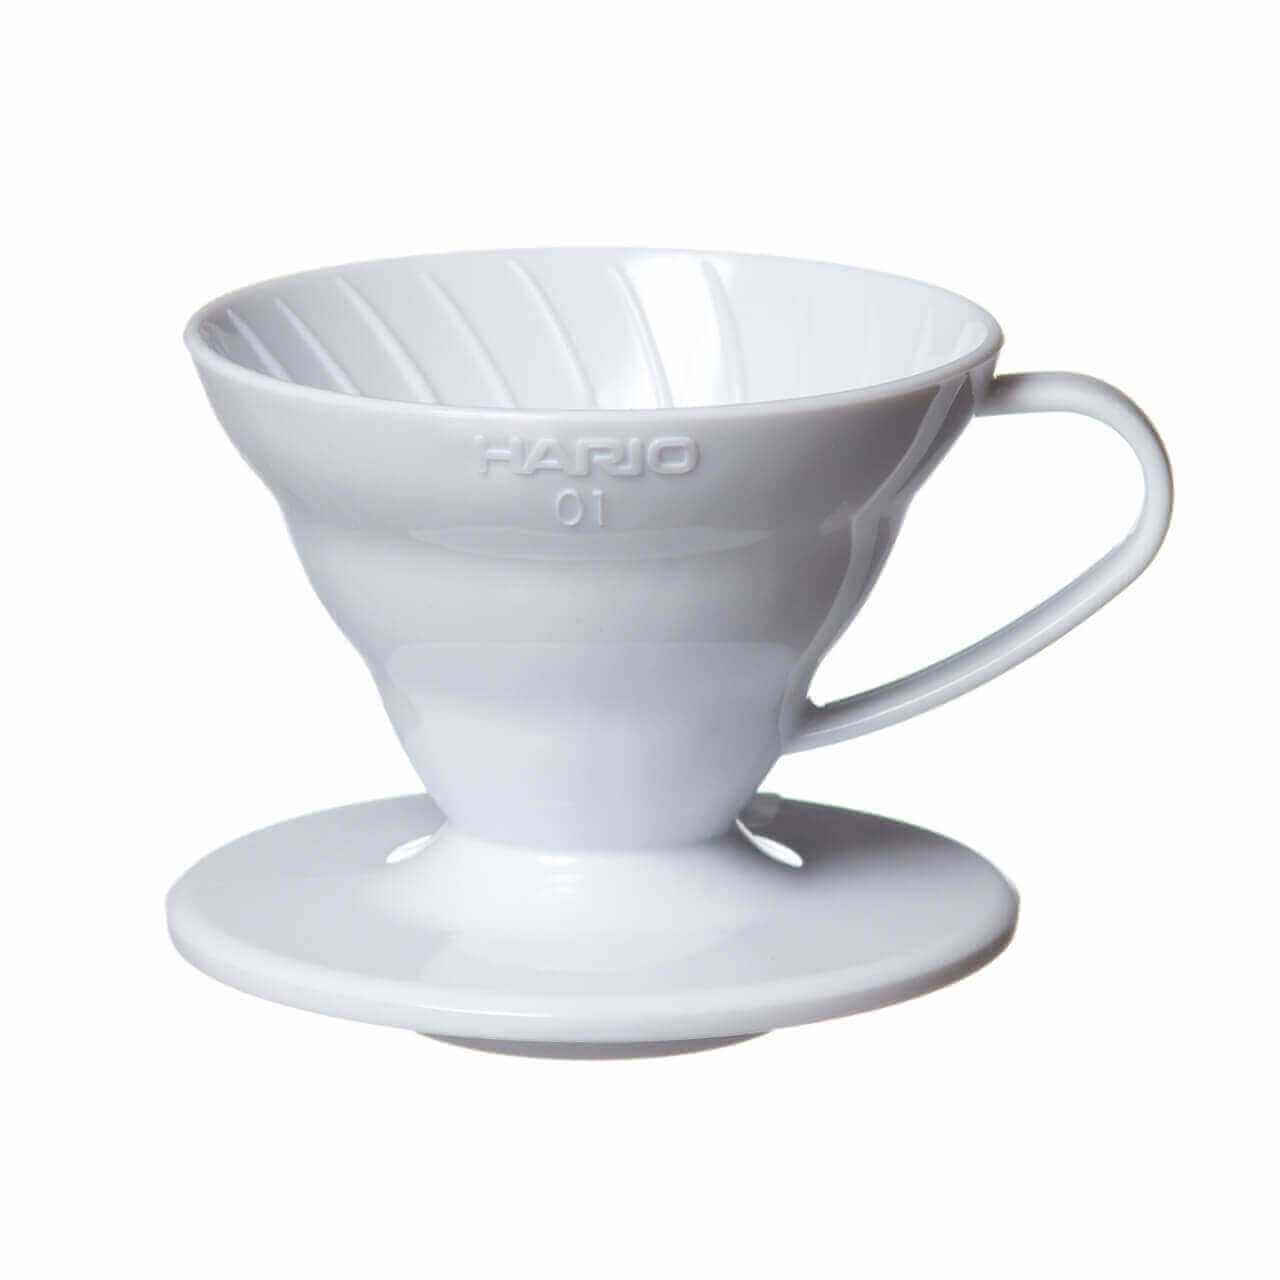 ILCANA x Hario V60限量彩色濾杯01 02/有田燒濾杯/陶瓷濾杯 日本製 Dripper - Quality Life Coffee